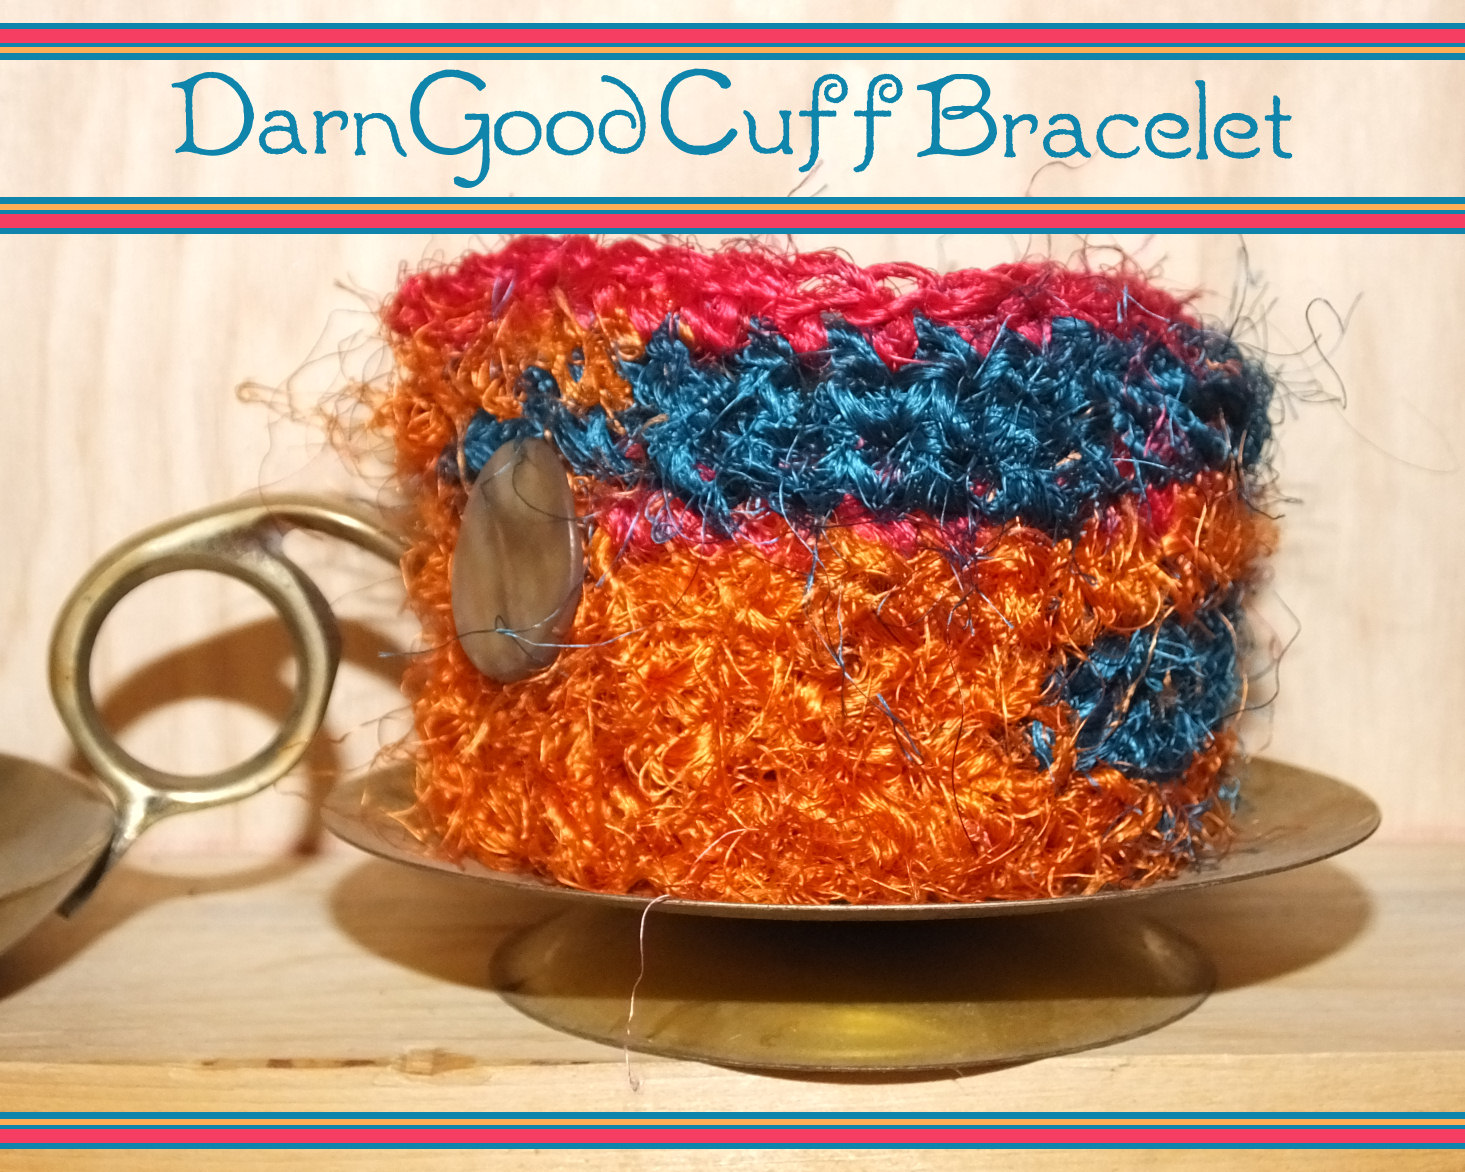 Darn Good Cuff Bracelet- a bracelet made with recycled sari silk yarn